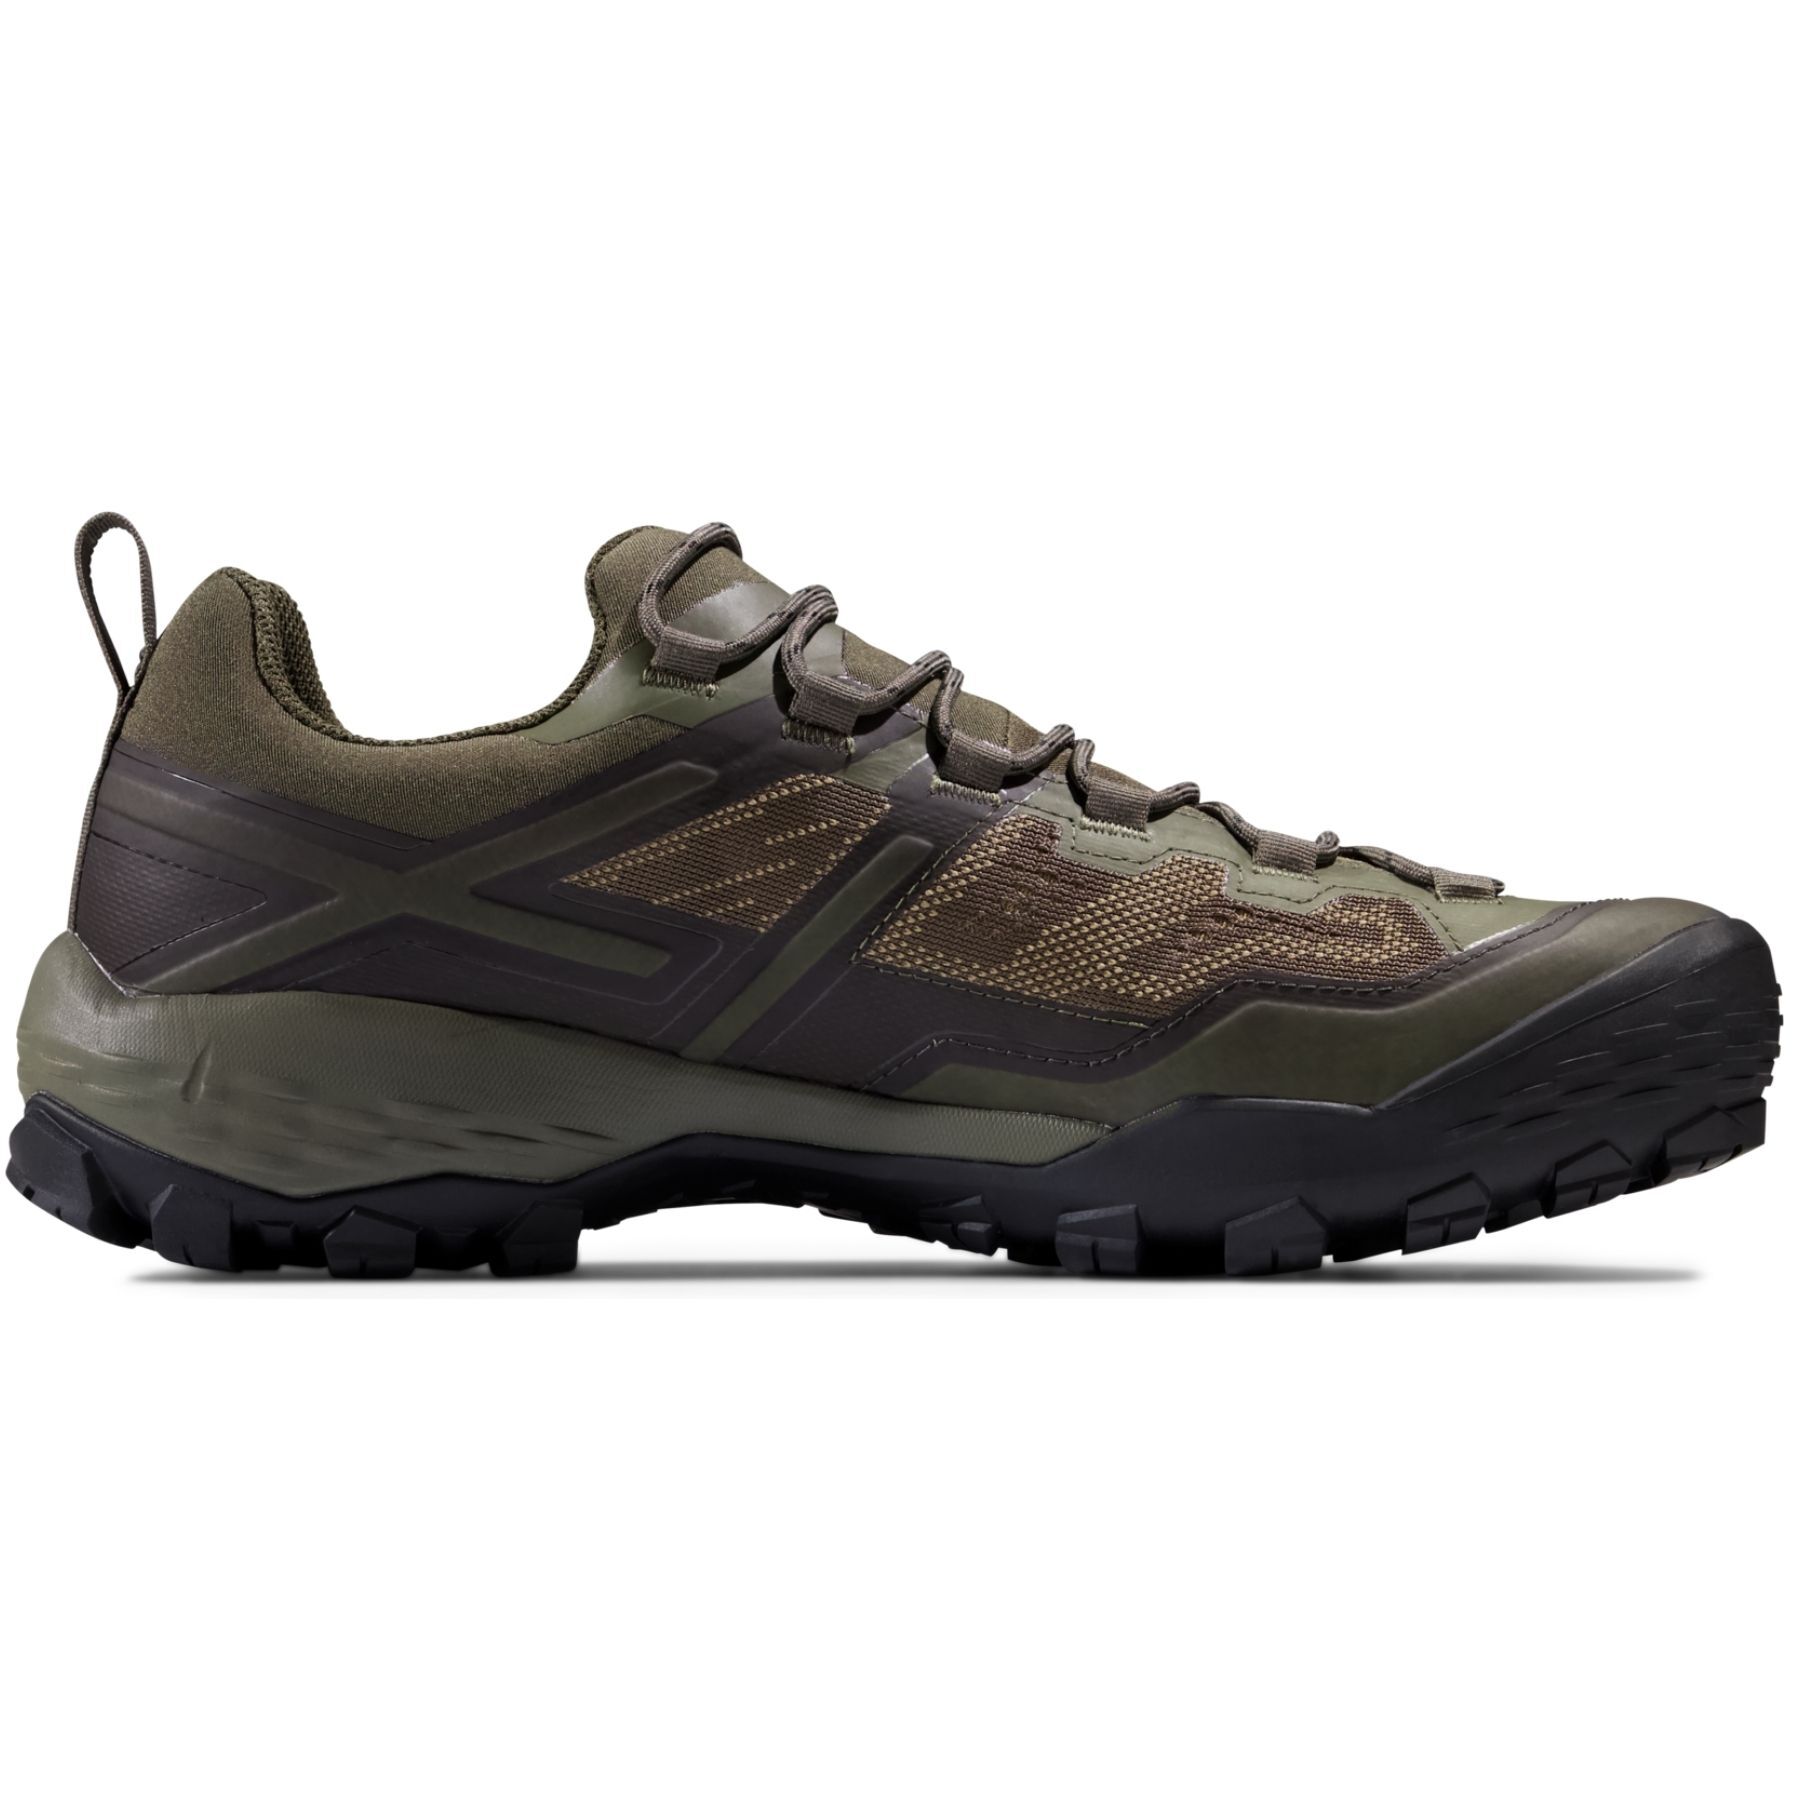 Mammut - Ducan Low GTX® - Zapatillas de trekking - Hombre